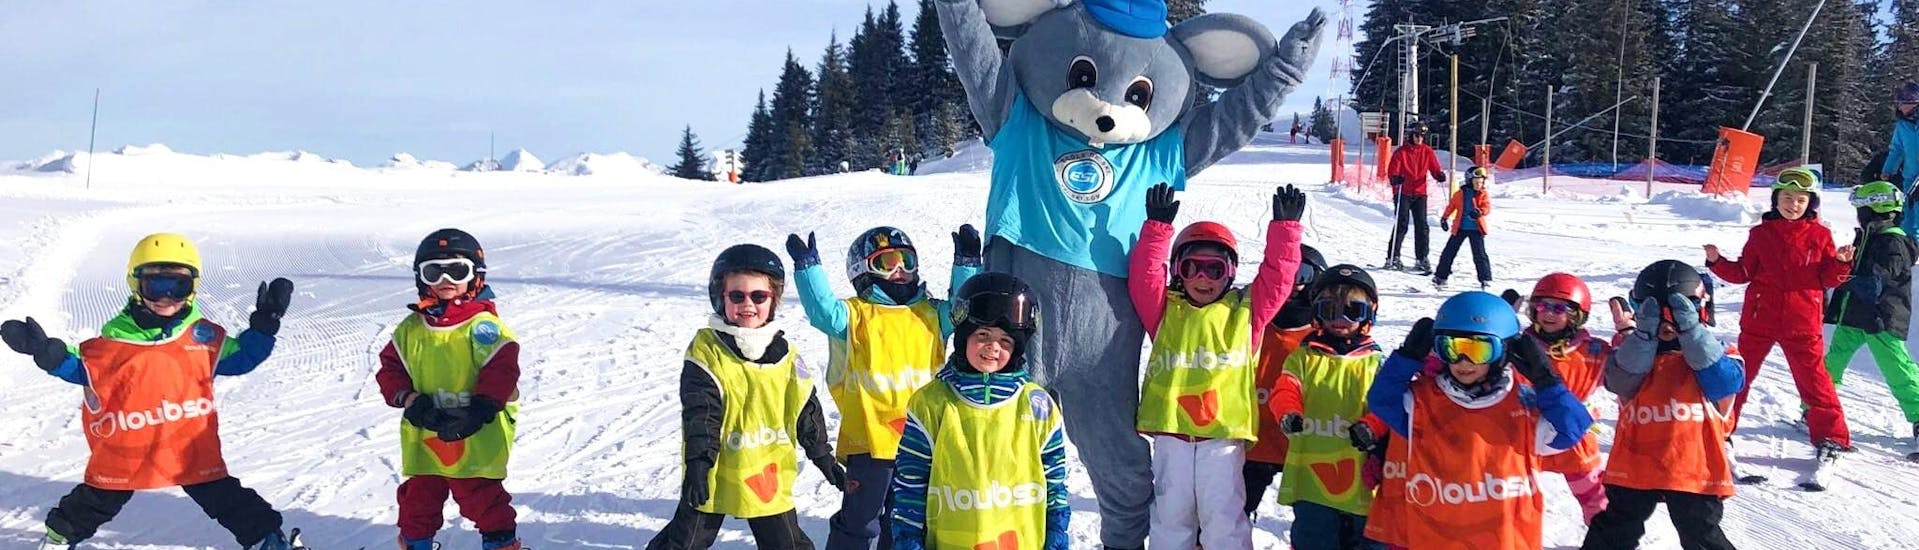 kids-ski-lessons-afternoon-les-carroz-esi-grand-massif-hero